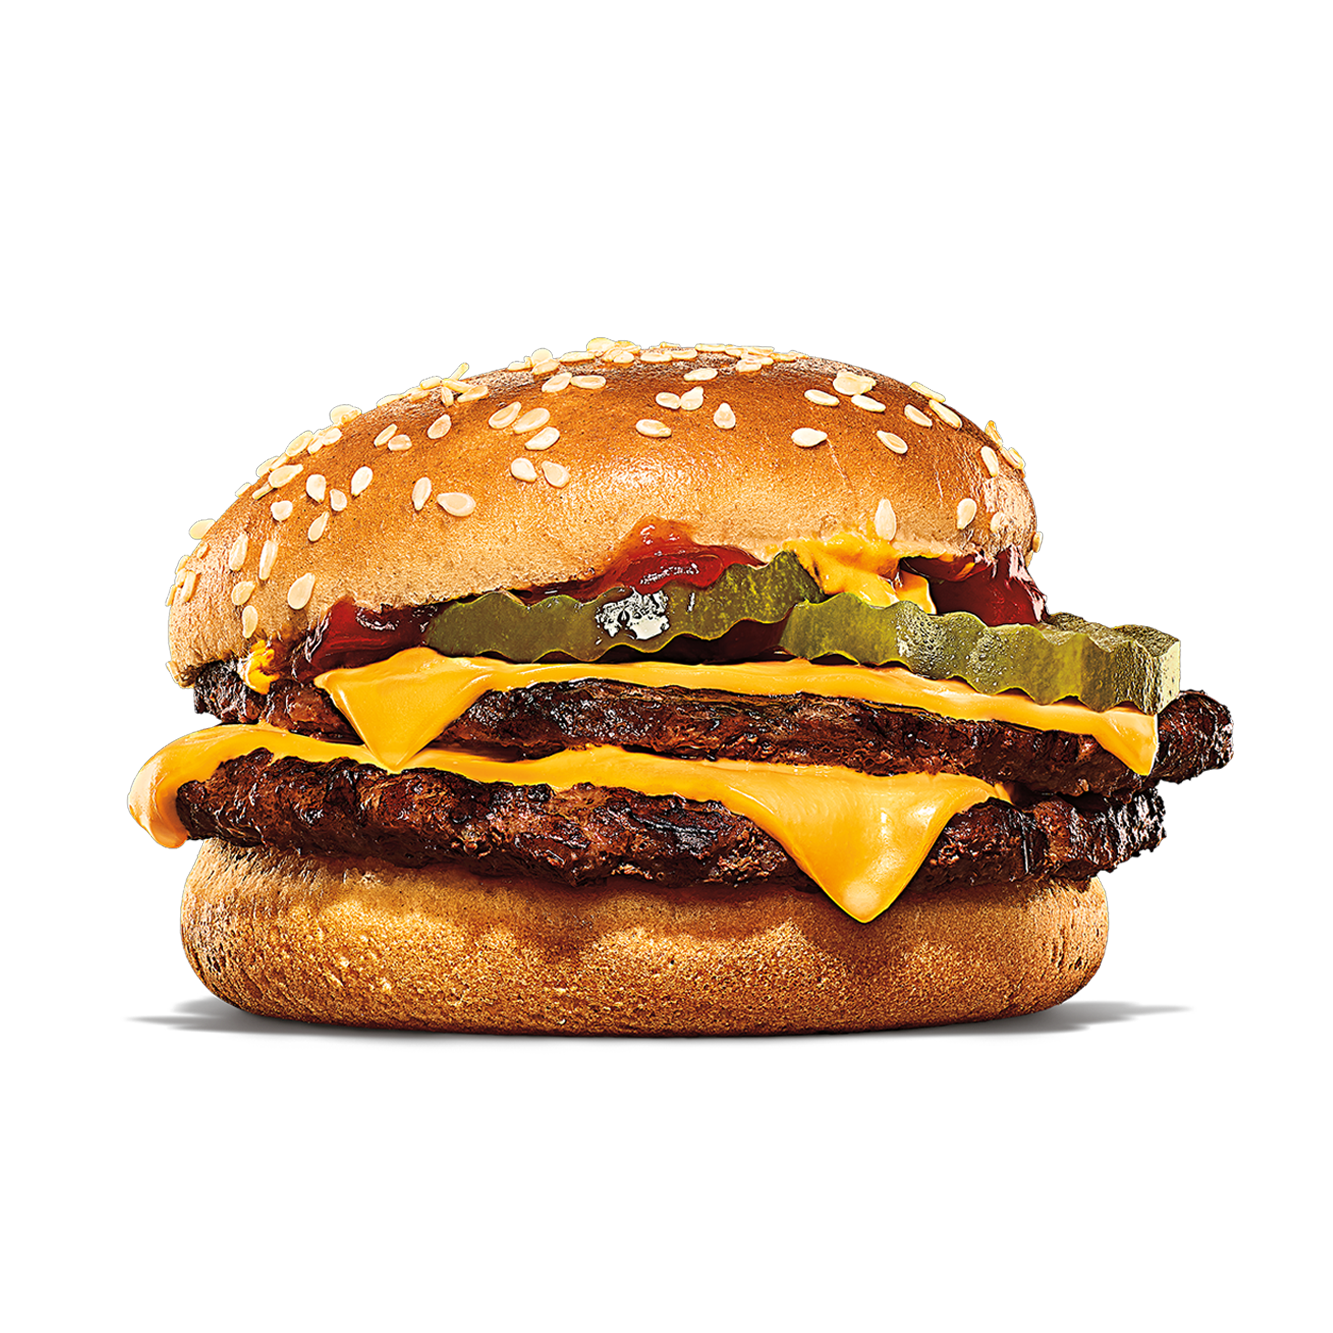 Burger King Daytona Beach (386)788-4242